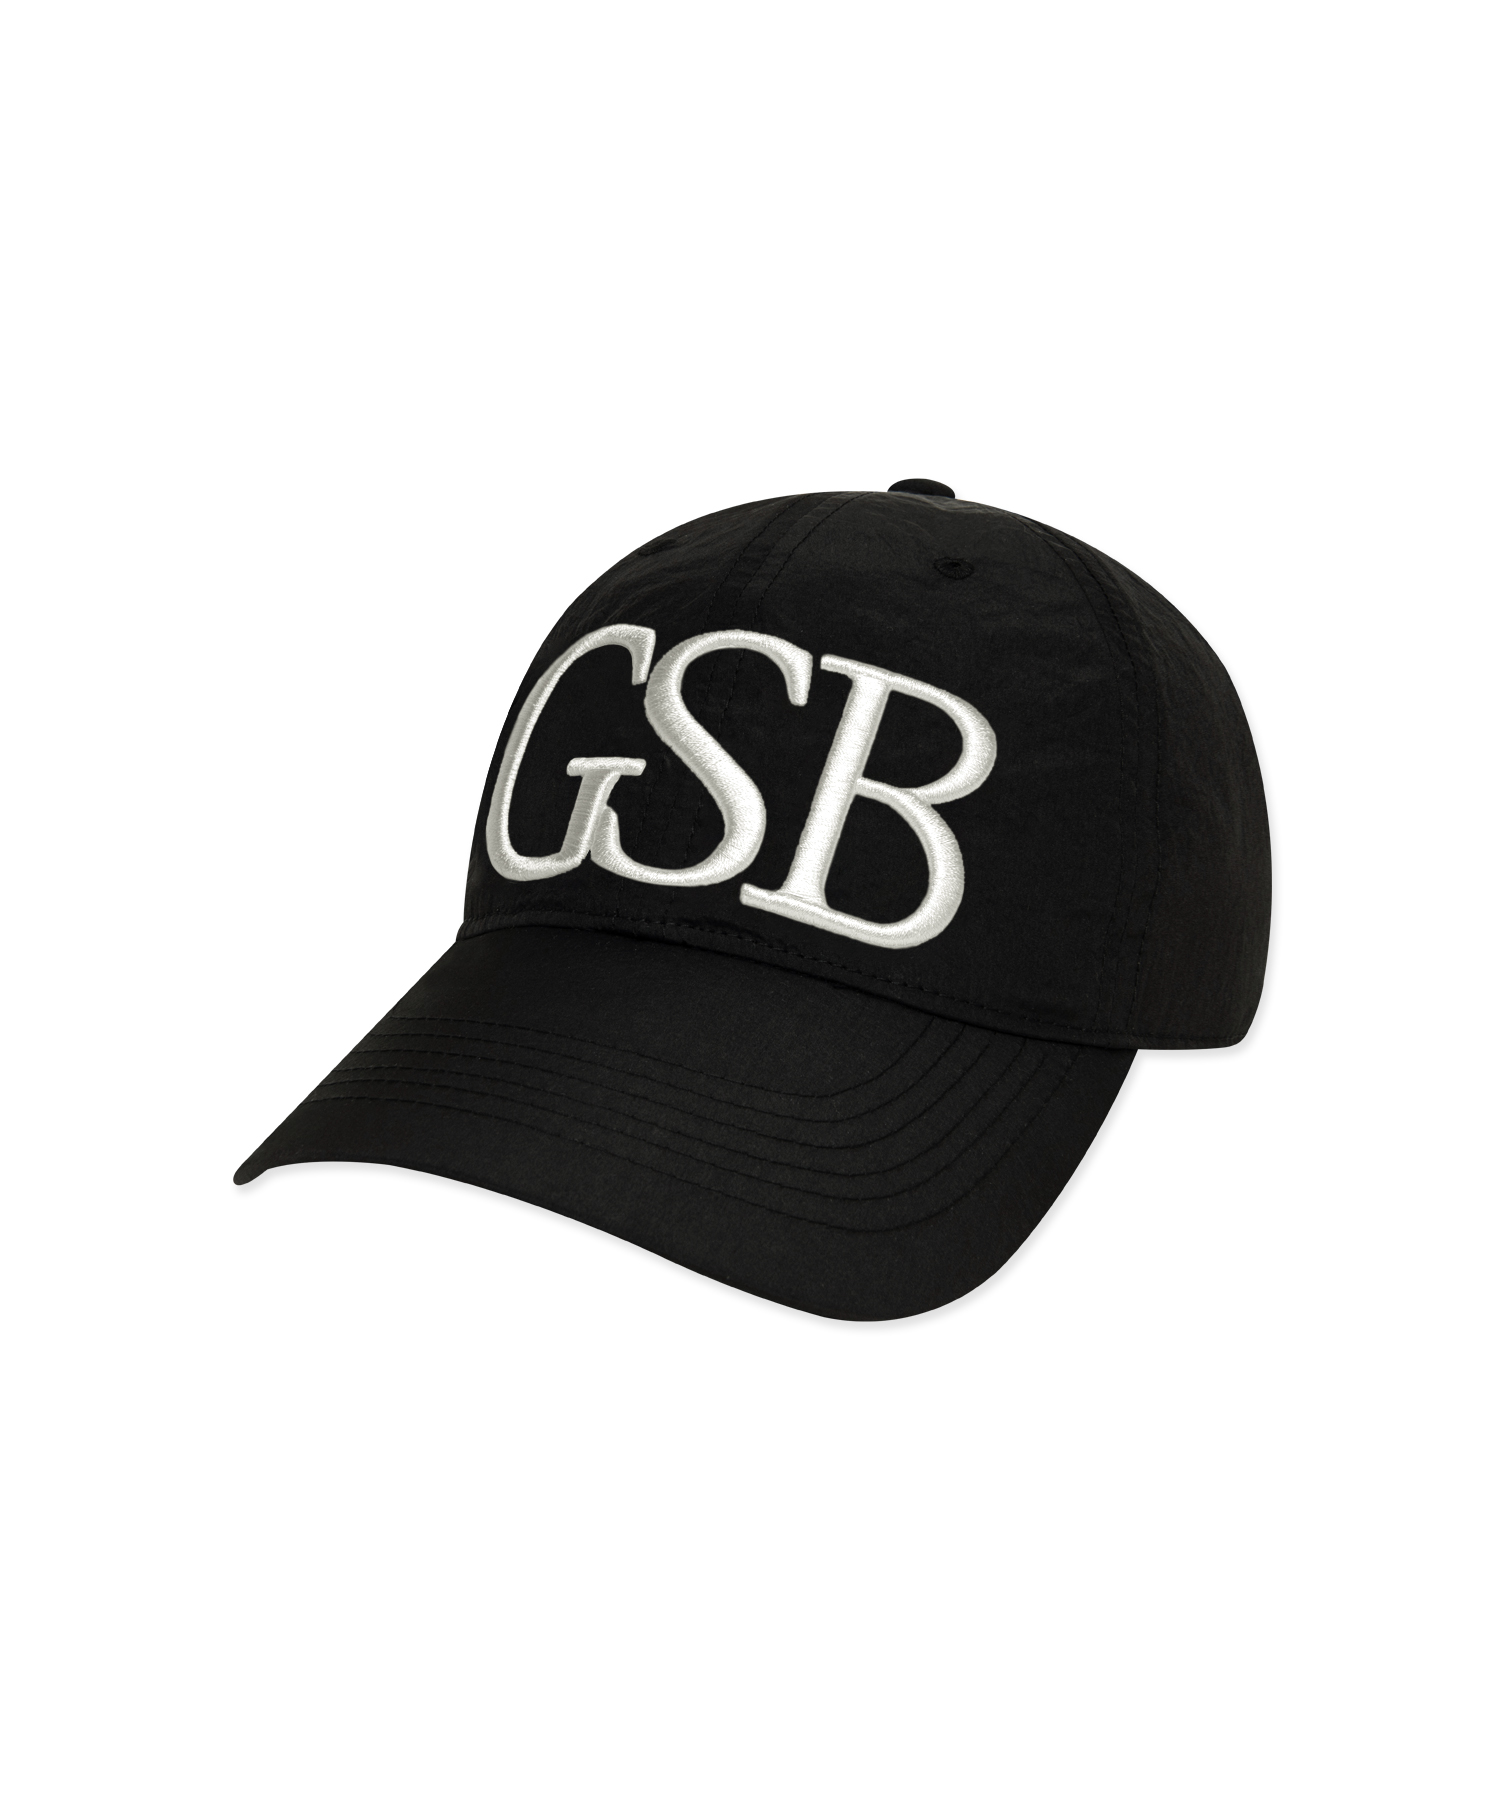 GSB GLOSSY CAP black